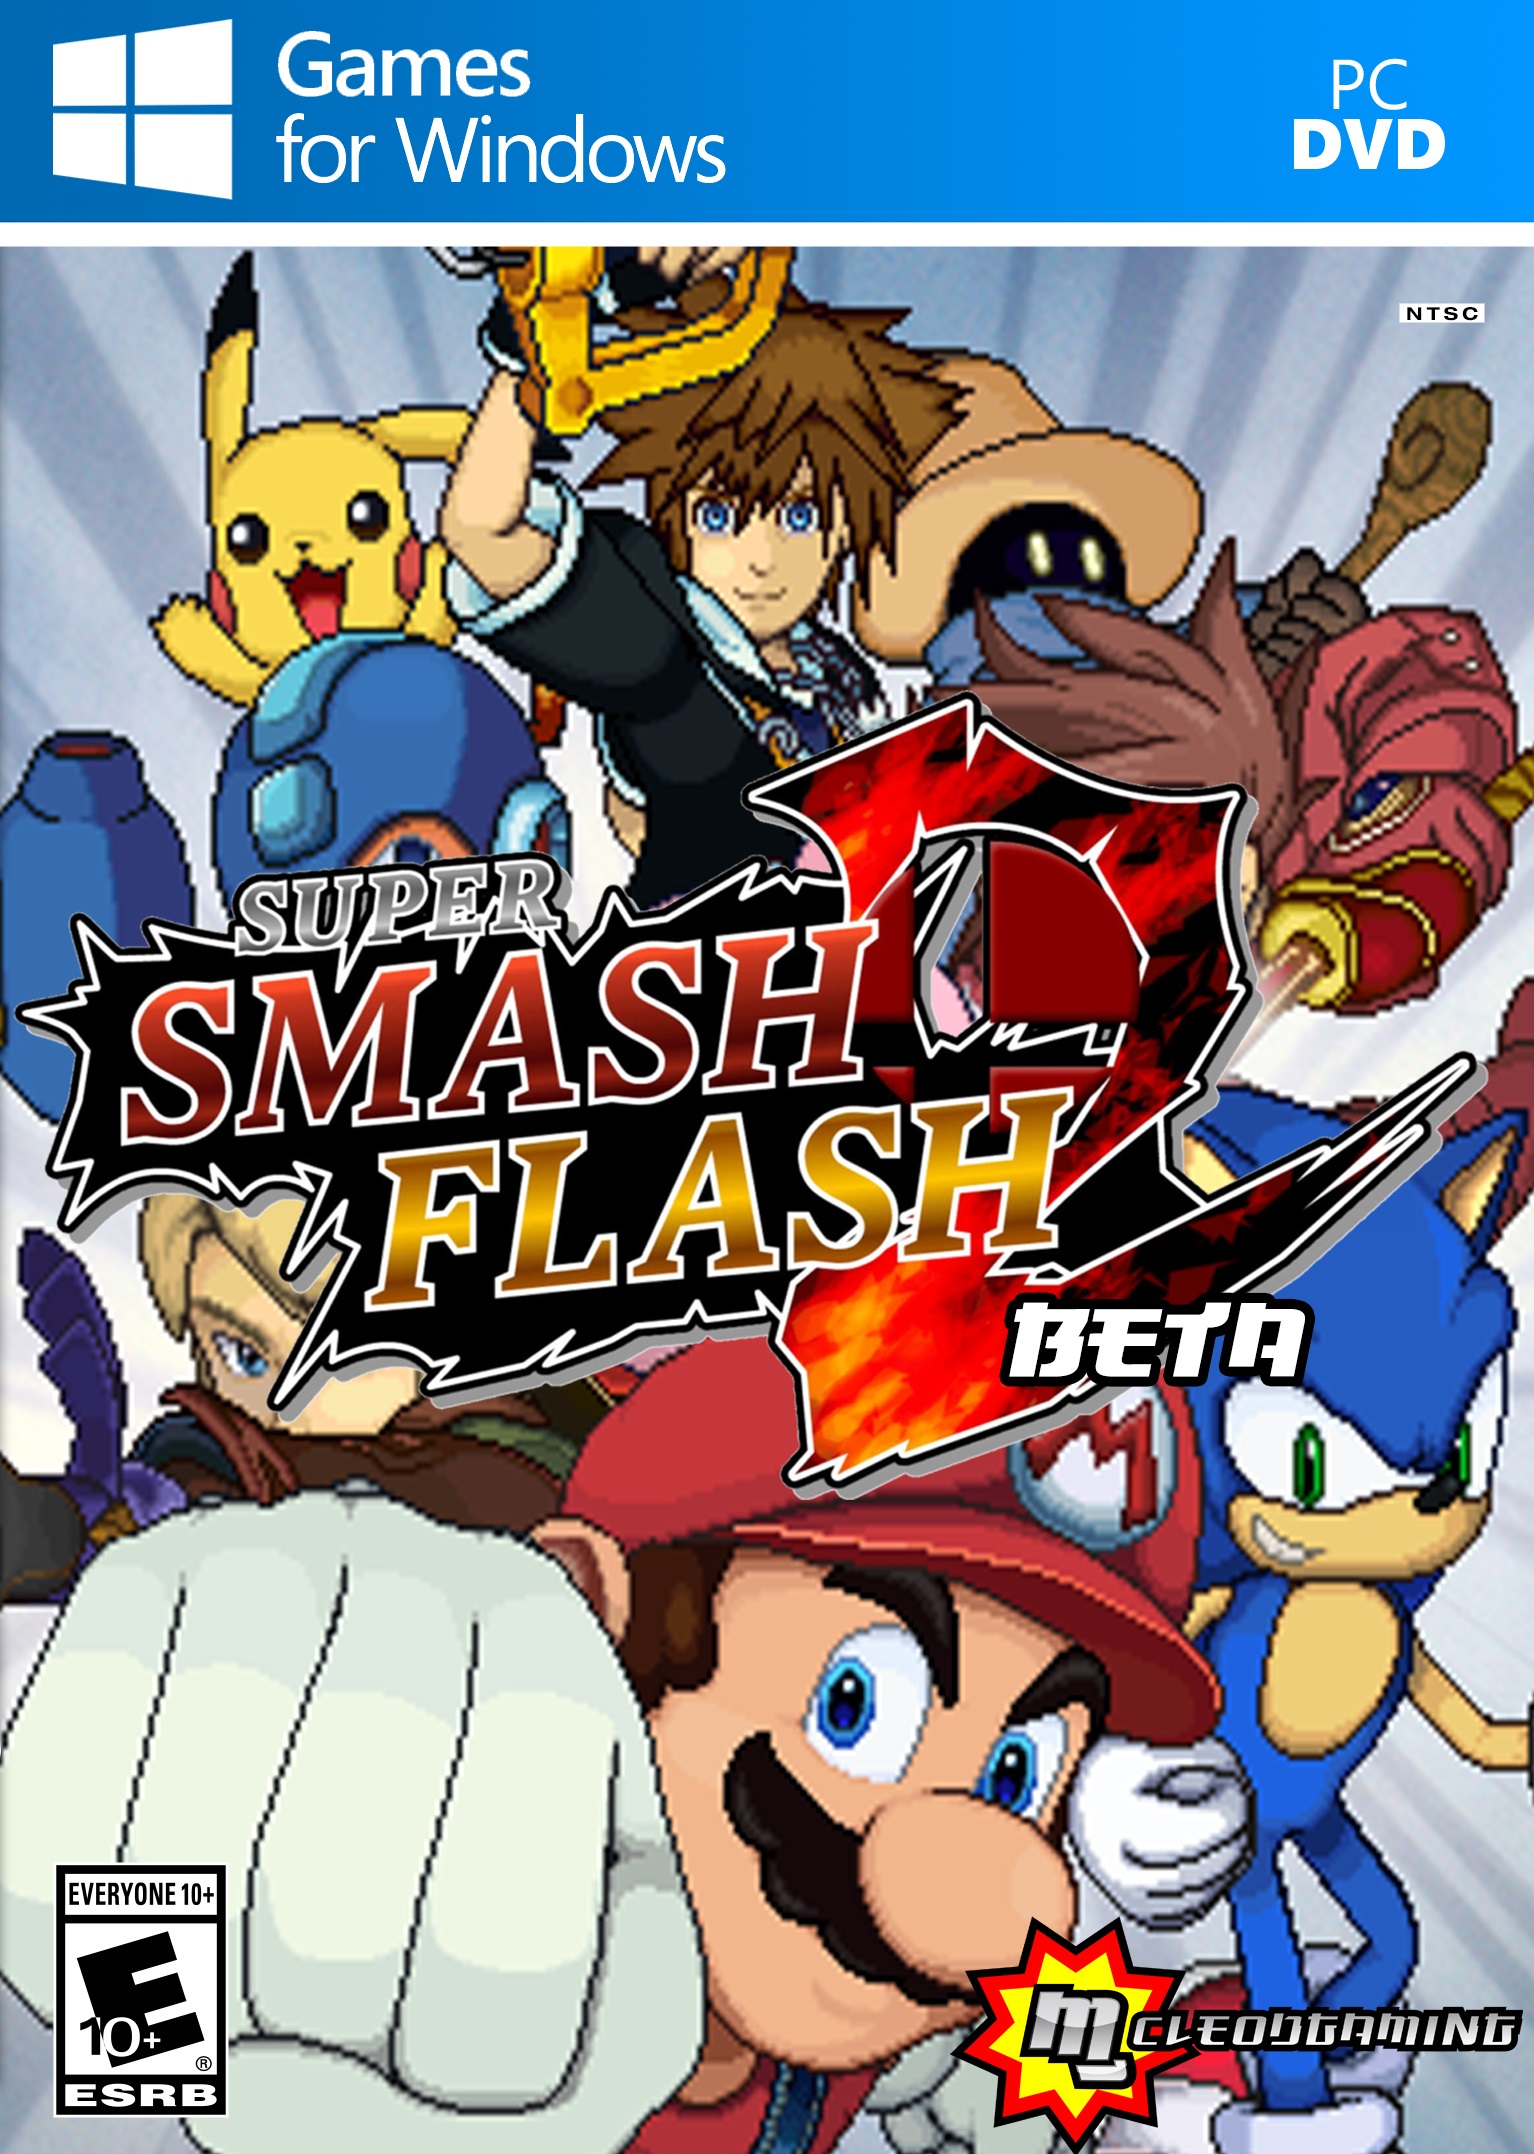 super smash flash 2 beta pc download